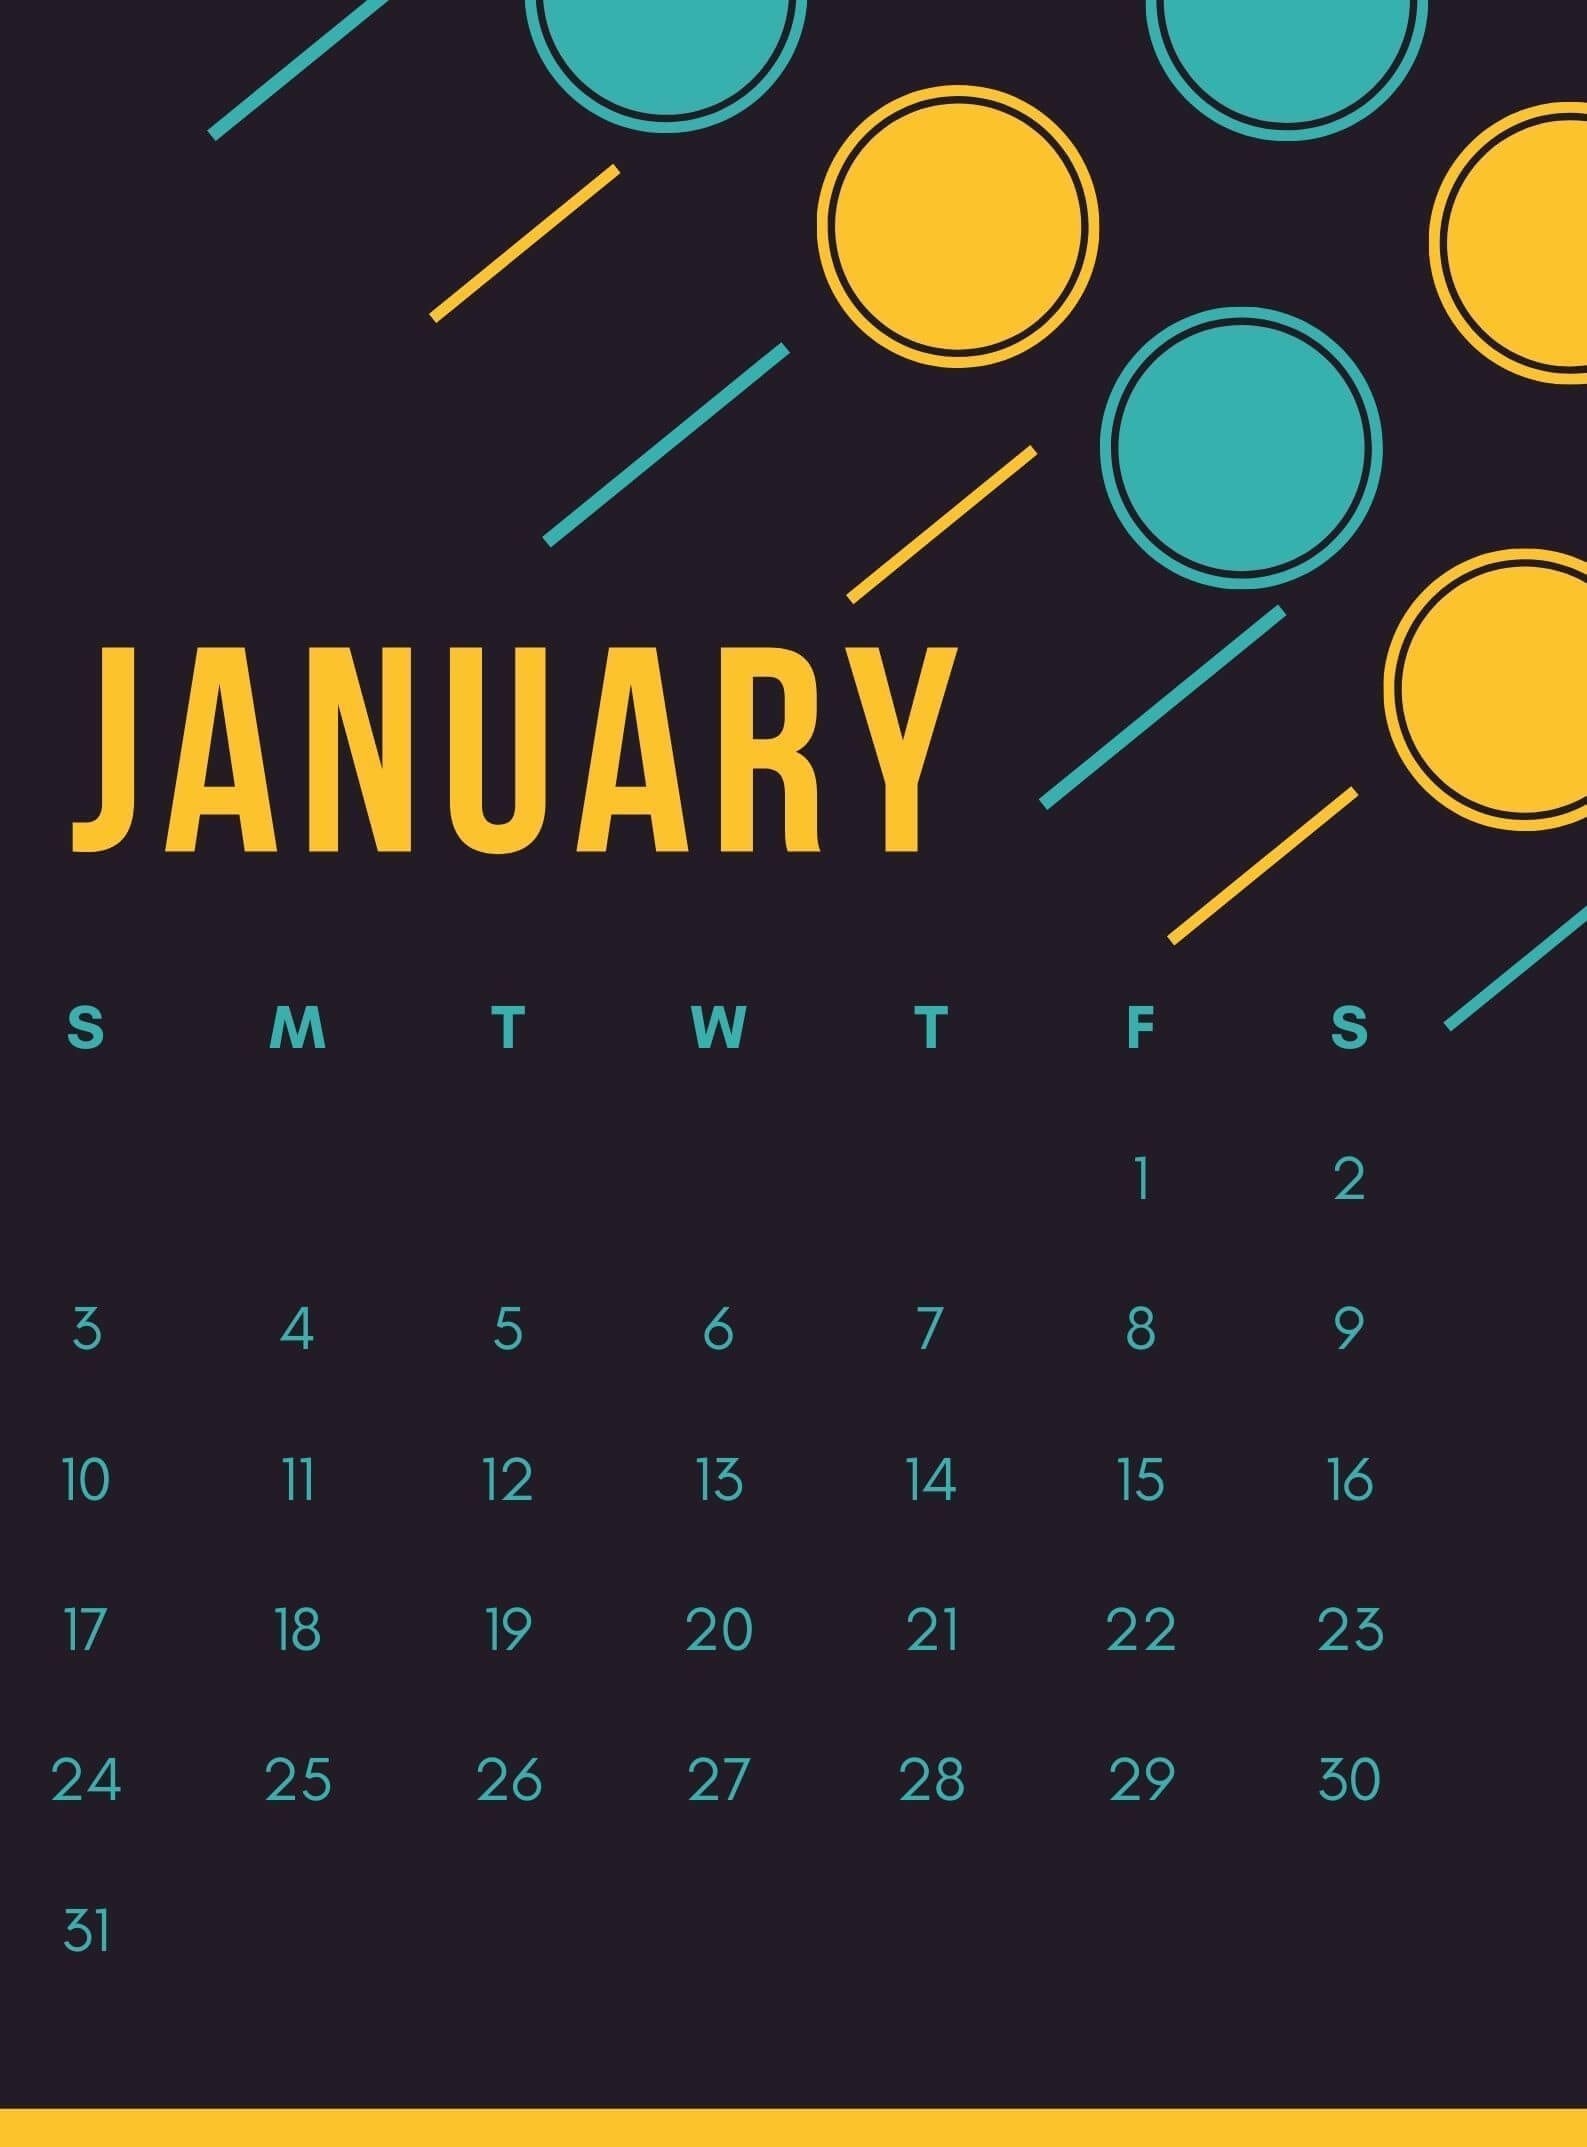 January 2021 Calendar Wallpaper for iPhone